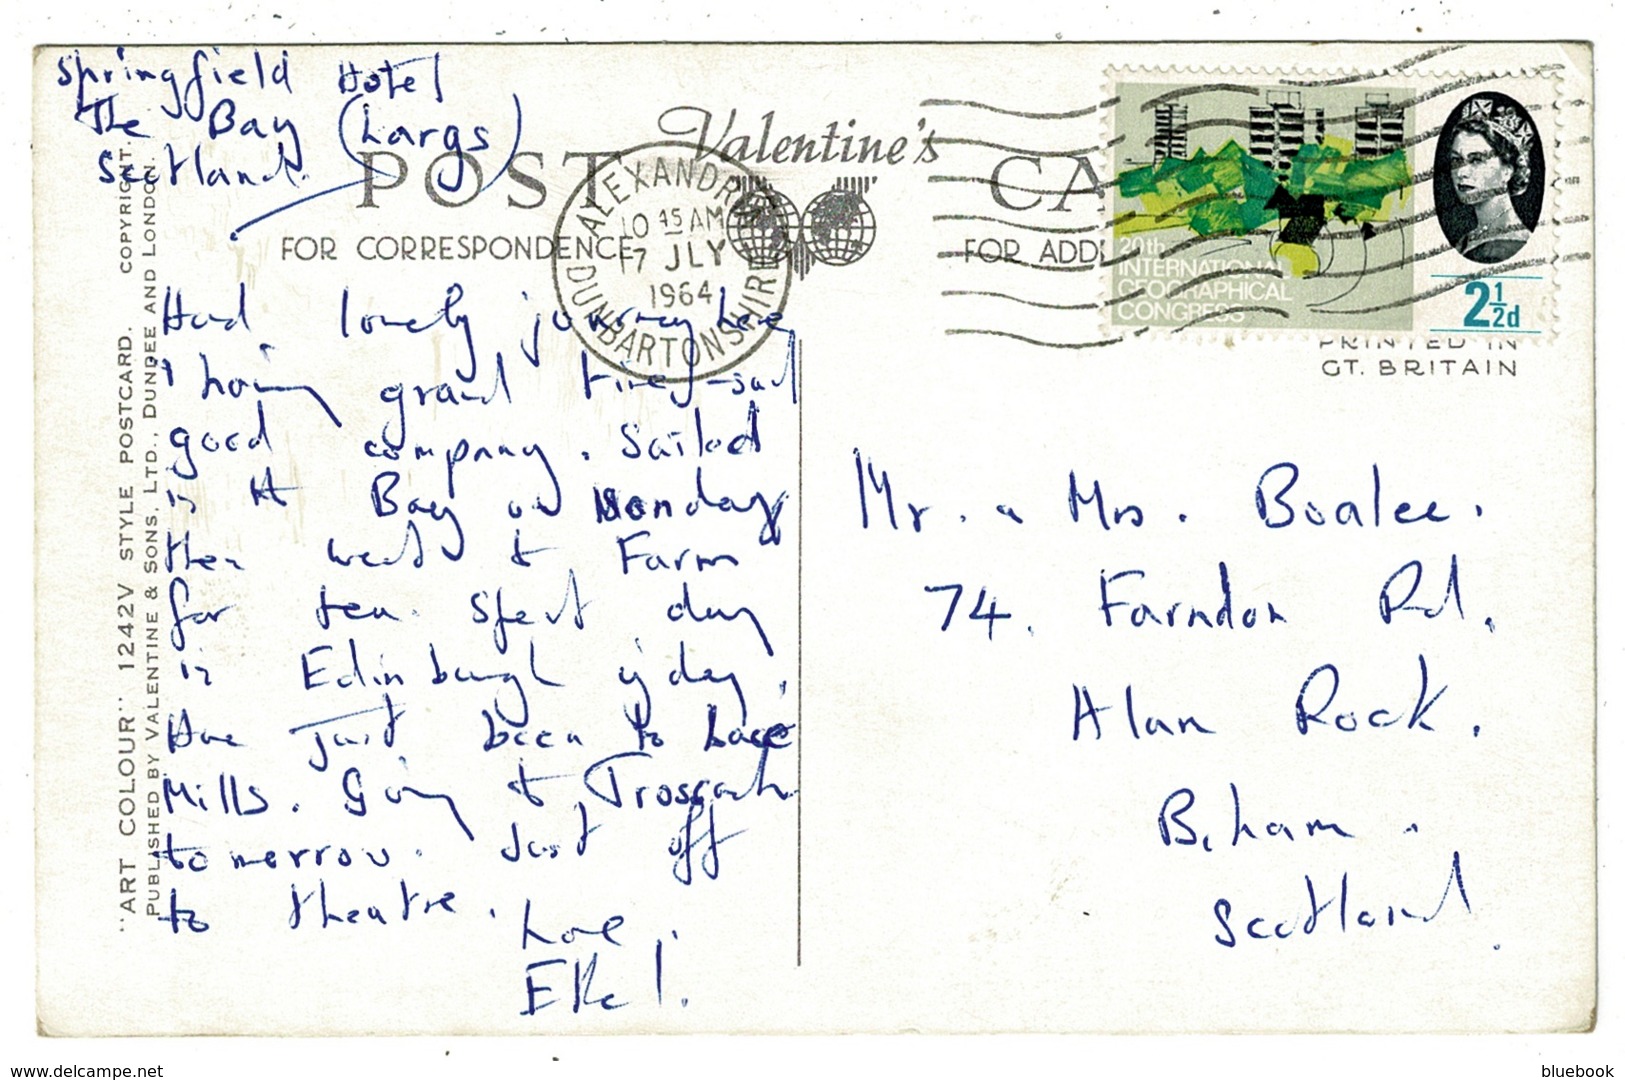 Ref 1357 -  1964 Postcard - Largs From The Pier - Scotland - Gordon Coat Of Arms & Tartan - Ayrshire